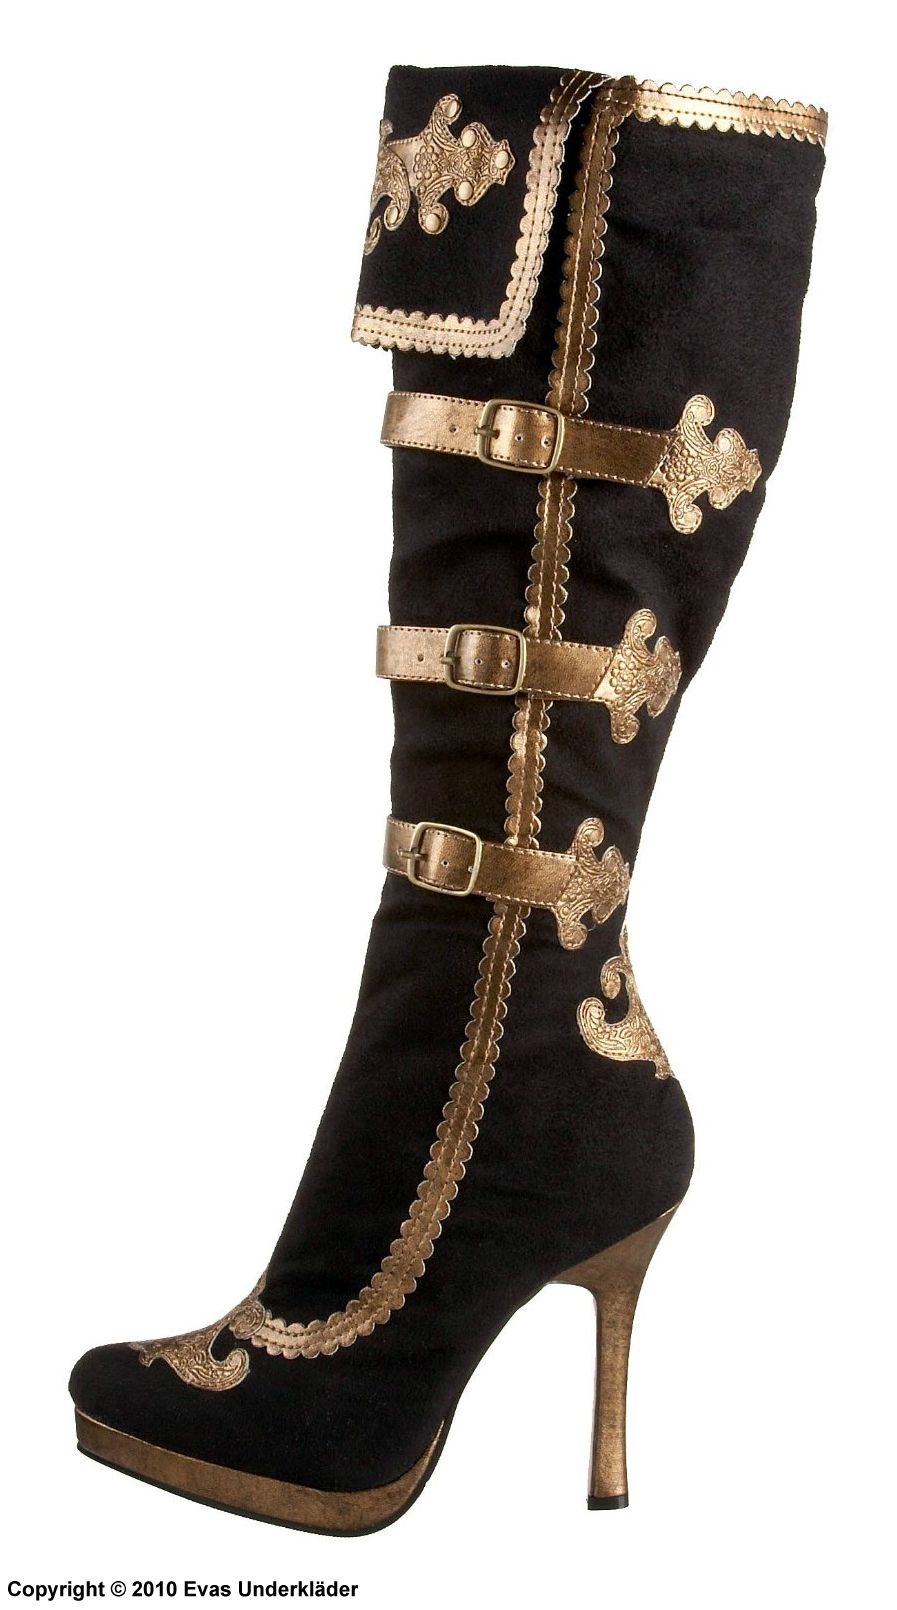 Knee-high pirate boot